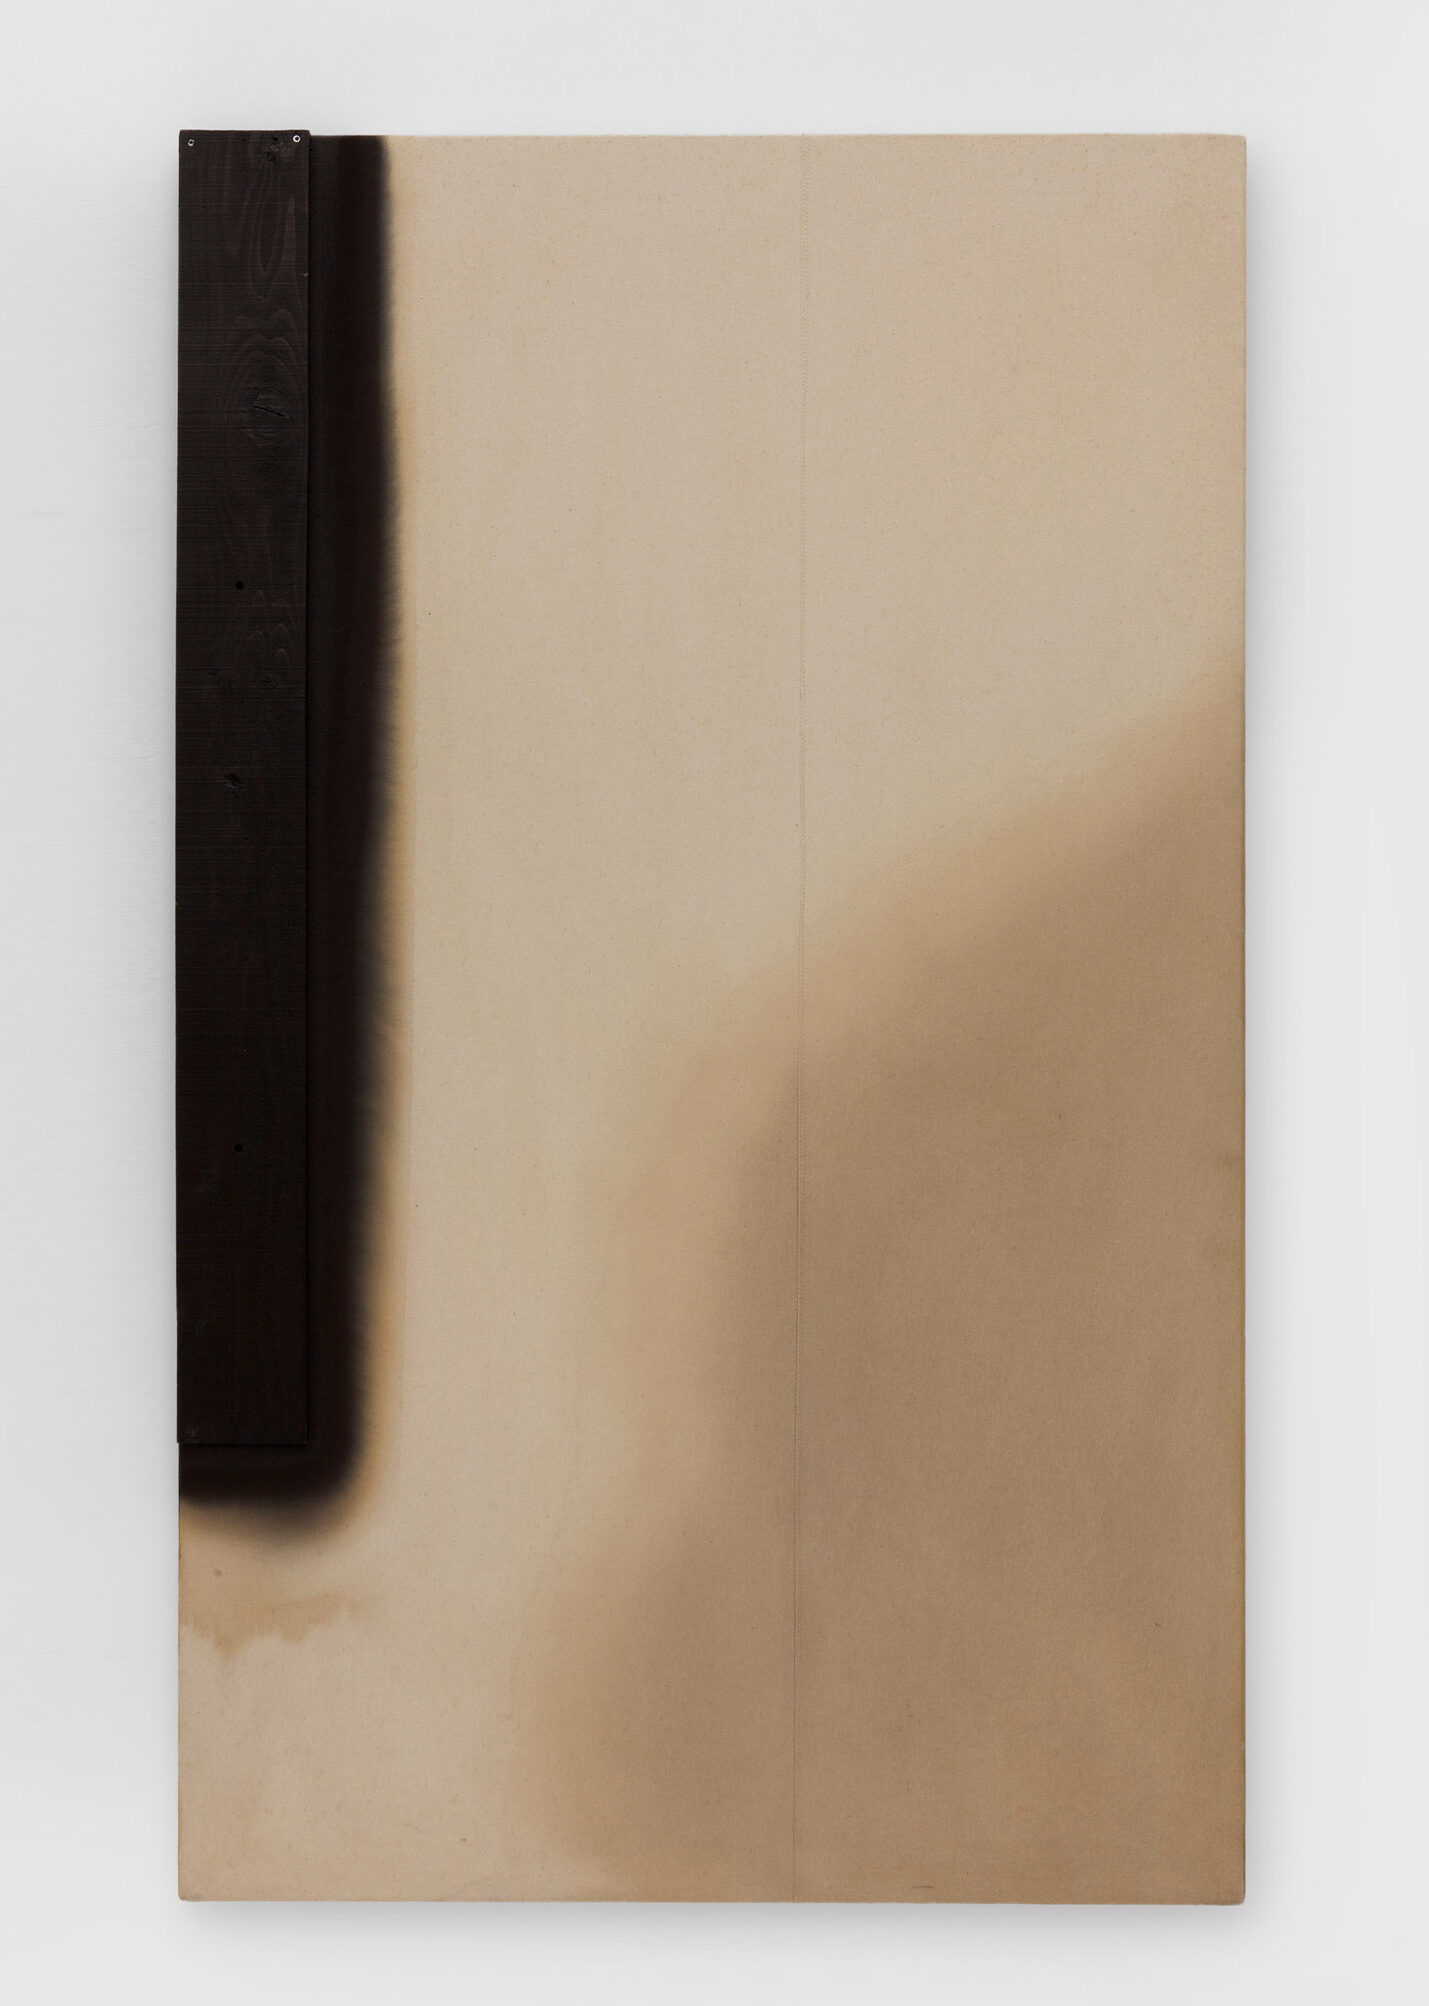 Koji Enokura, Intervention (Story—No. 44), 1991, Acrylic on cotton, wood plank, 162 x 97 cm © The Artist, Image Courtesy Blum Gallery